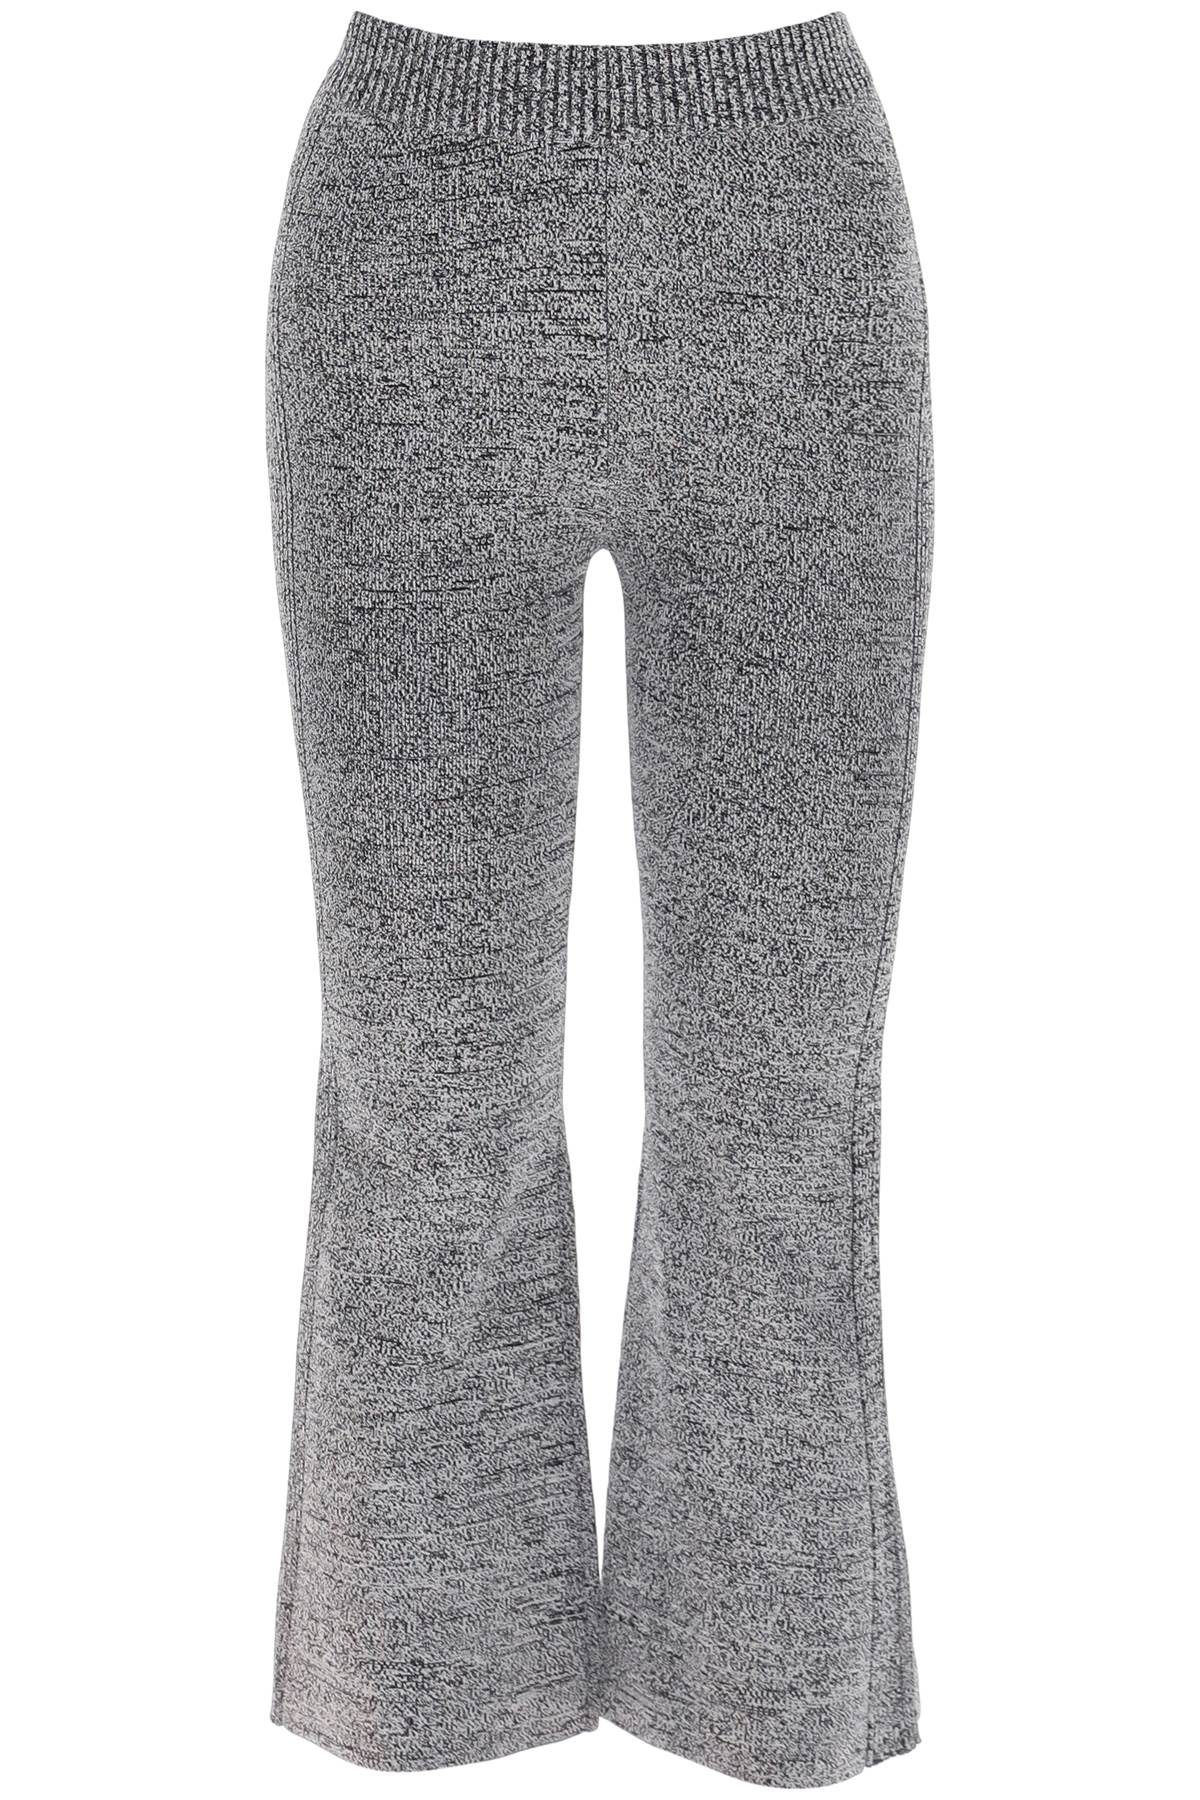 Ganni stretch knit cropped pants-0